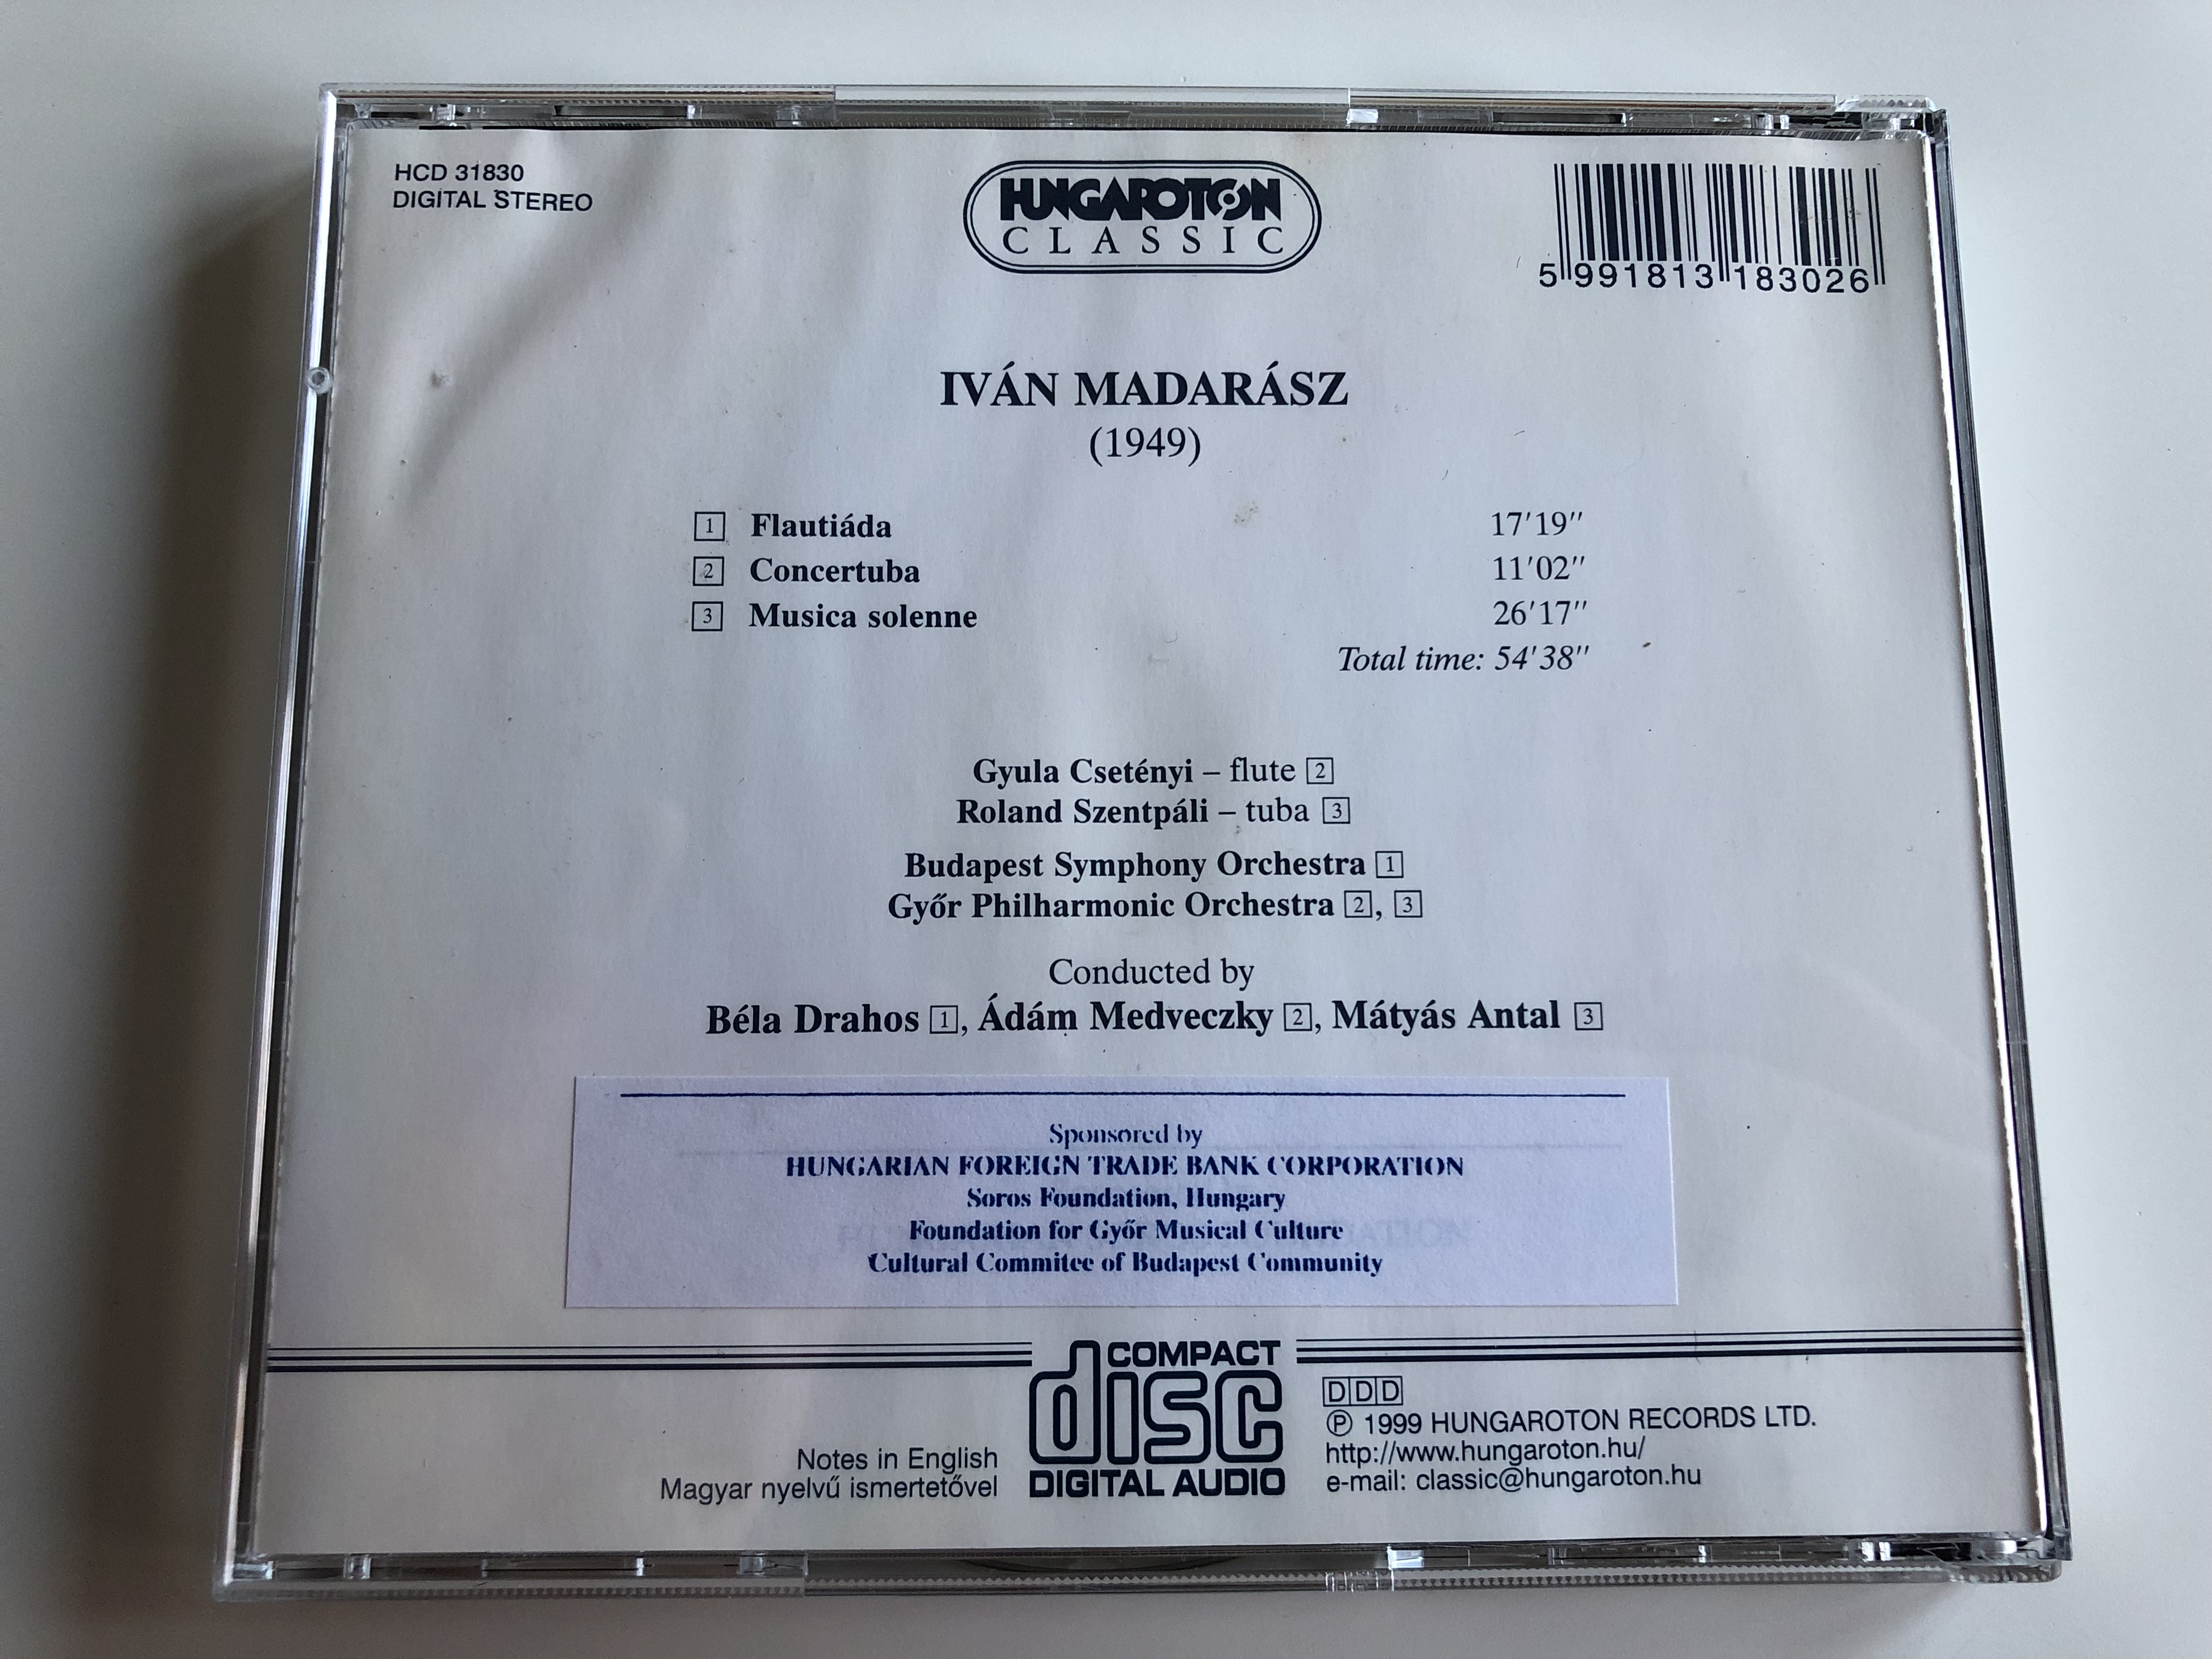 ivan-madarasz-flautiada-concertuba-musica-solenne-hungaroton-classic-audio-cd-1999-stereo-hcd-31830-8-.jpg